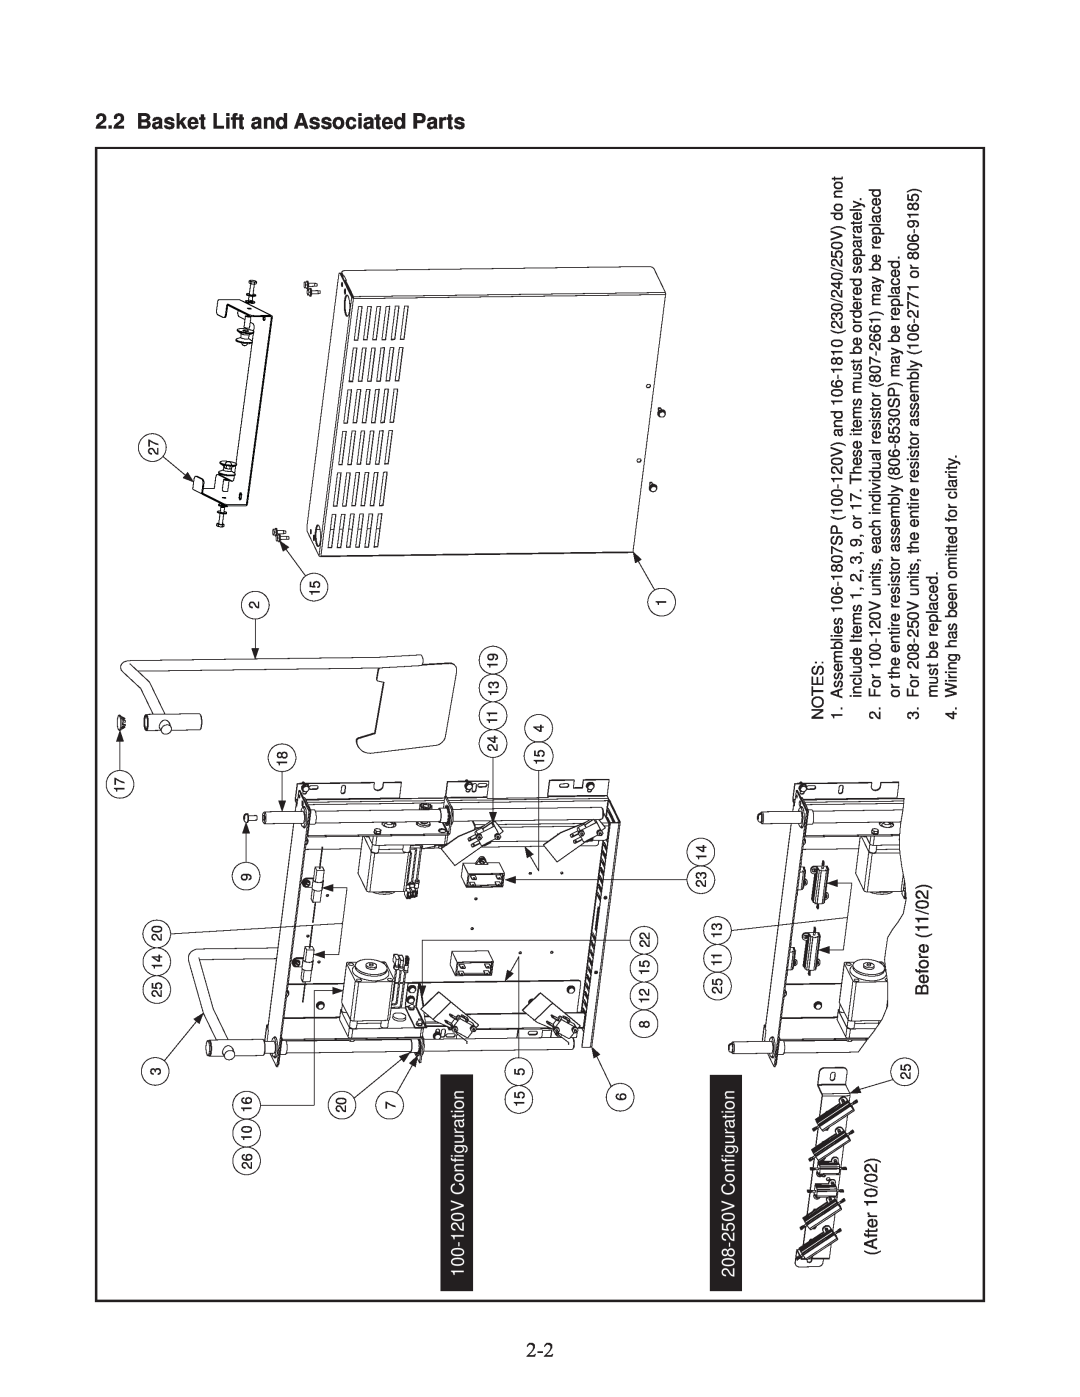 Frymaster 45, 35 manual Basket Lift and Associated Parts, 100-120VConfiguration, 208-250VConfiguration 